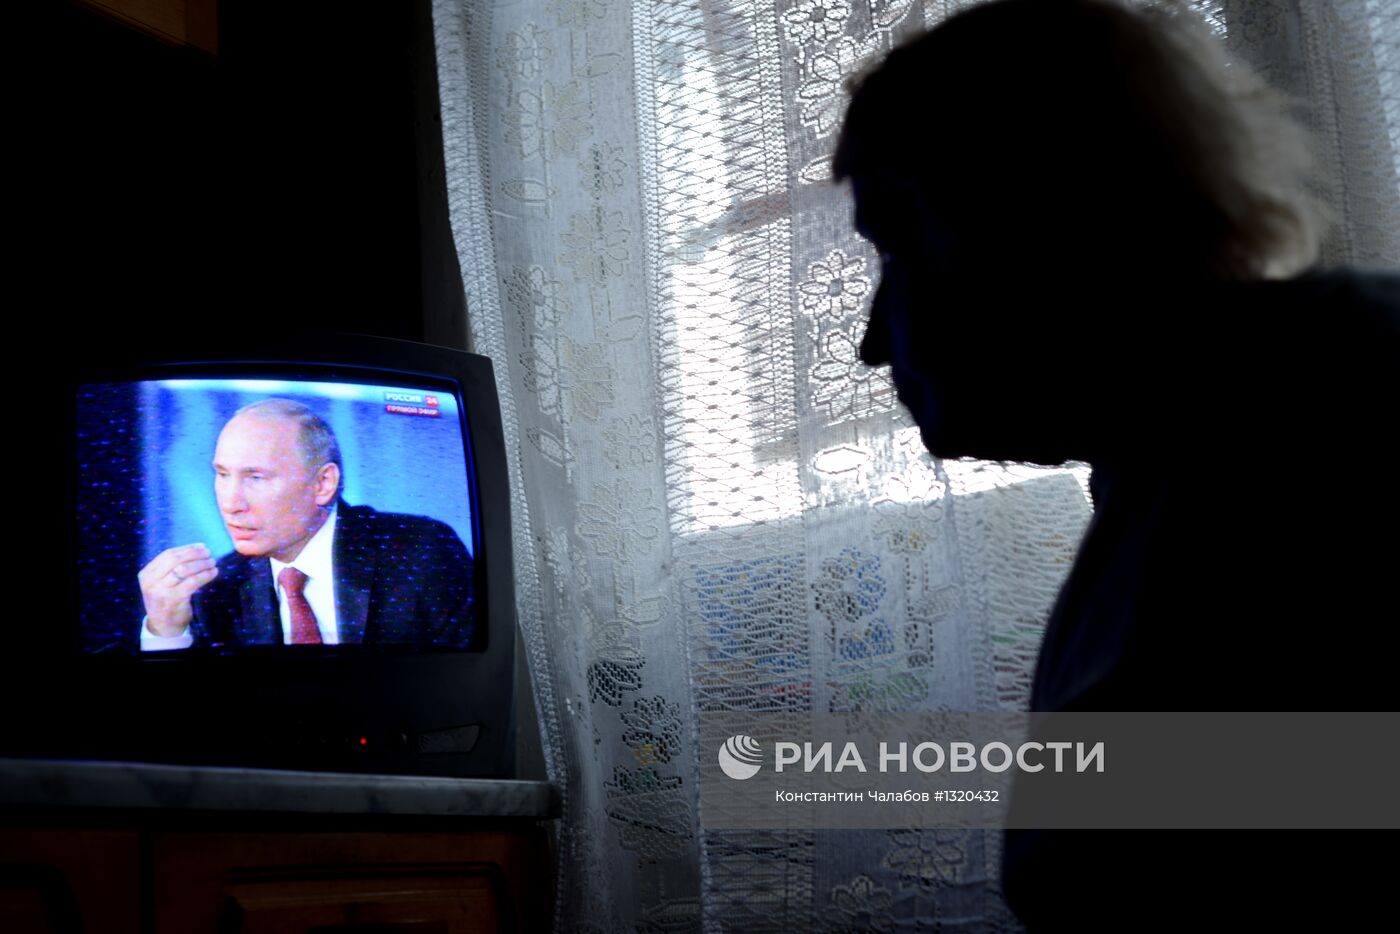 Трансляция пресс-конференции Владимира Путина